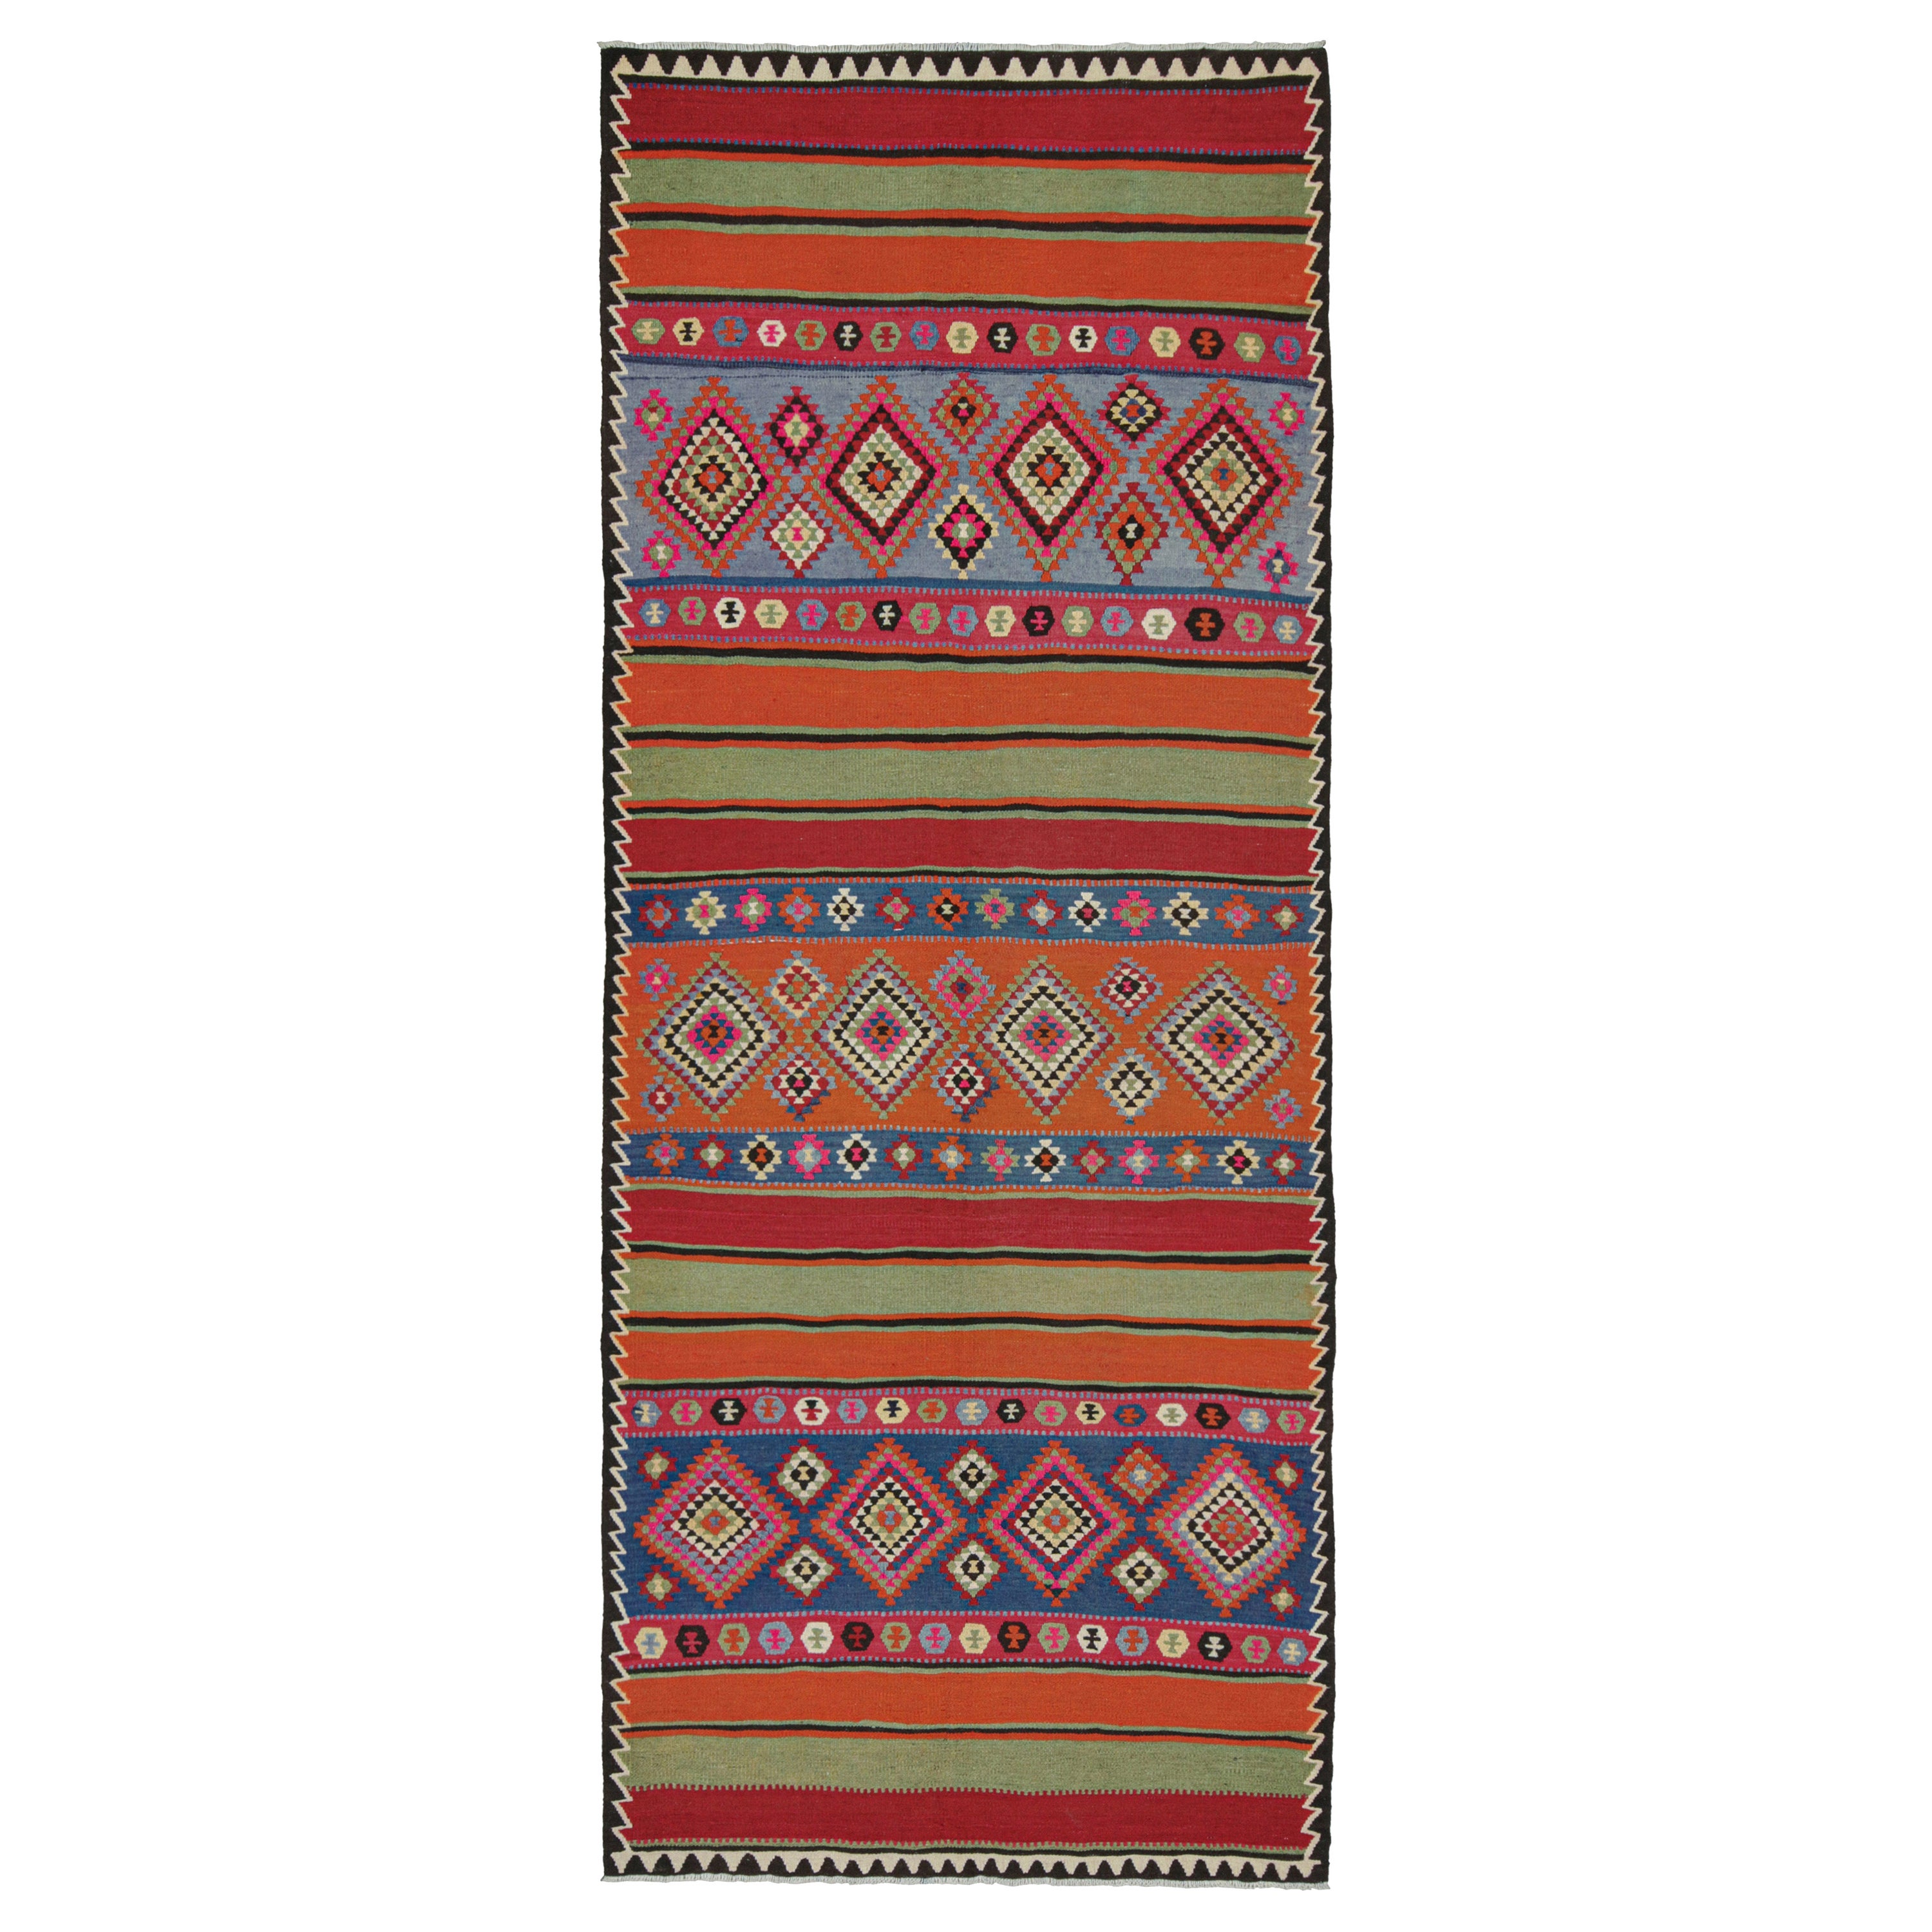 Vintage Persian Kilim in Polychromatic Geometric Patterns